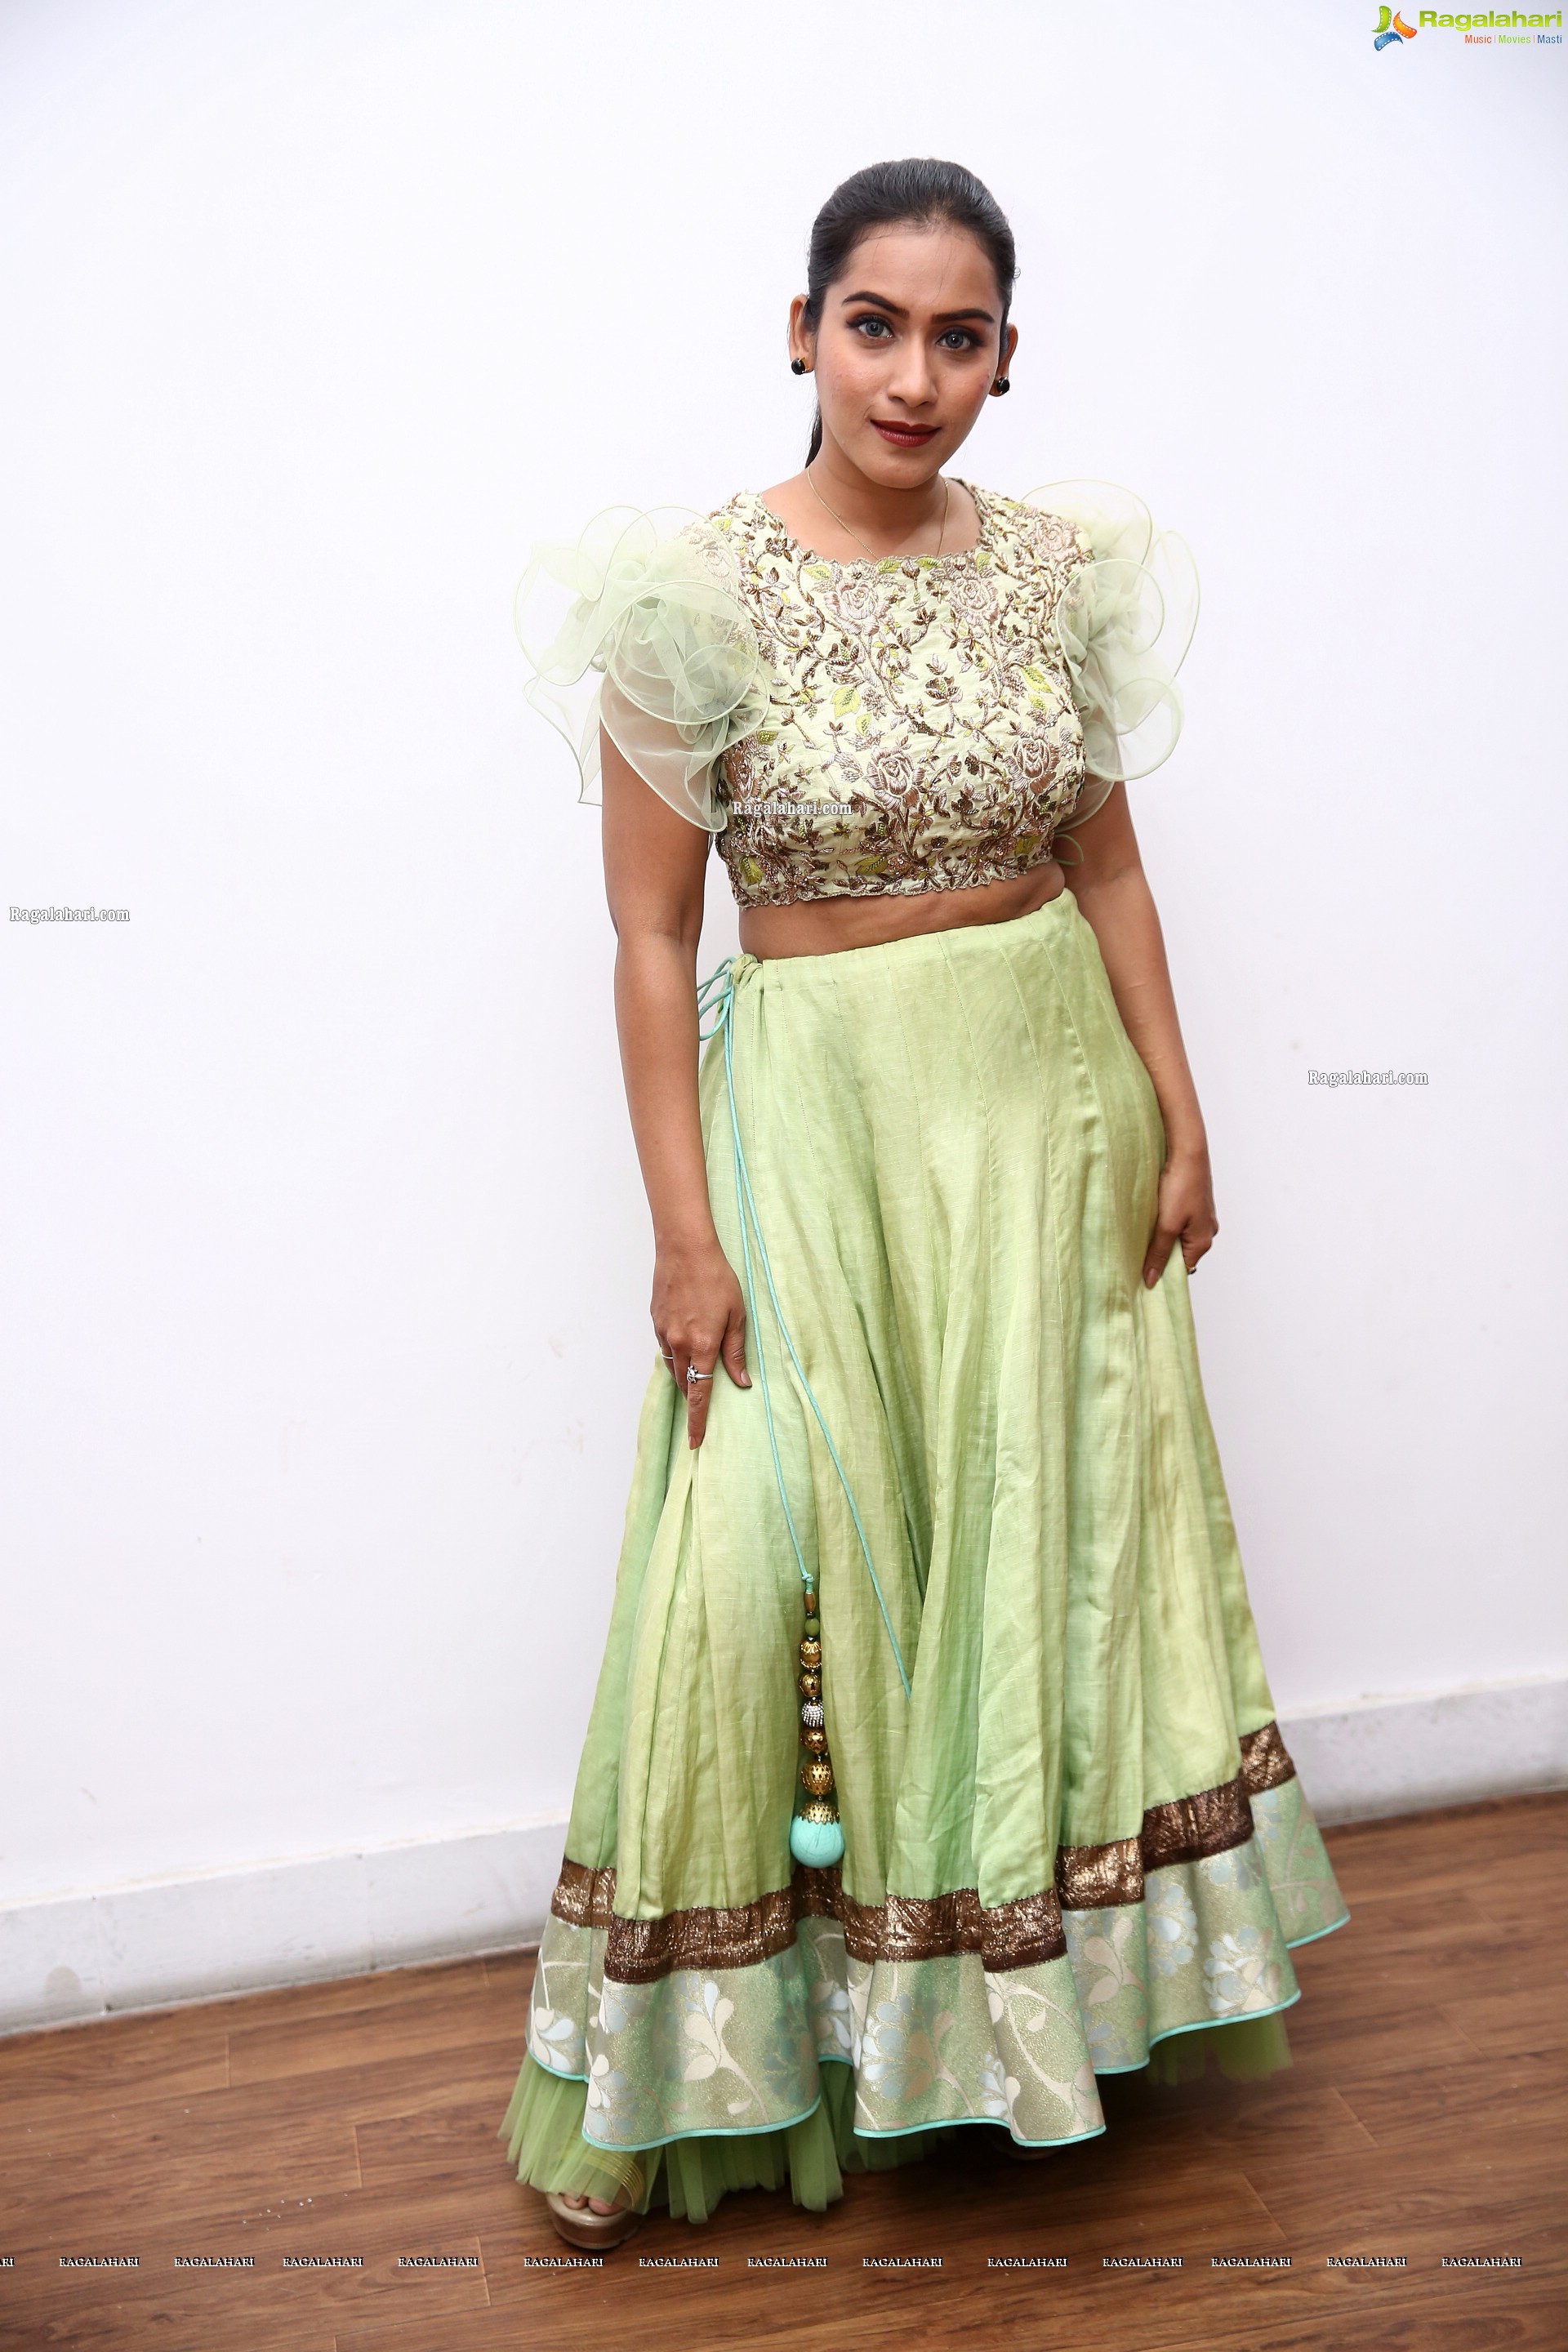 Preetie Singh Rajput in Pistachio Green Designer Lehenga, HD Photo Gallery